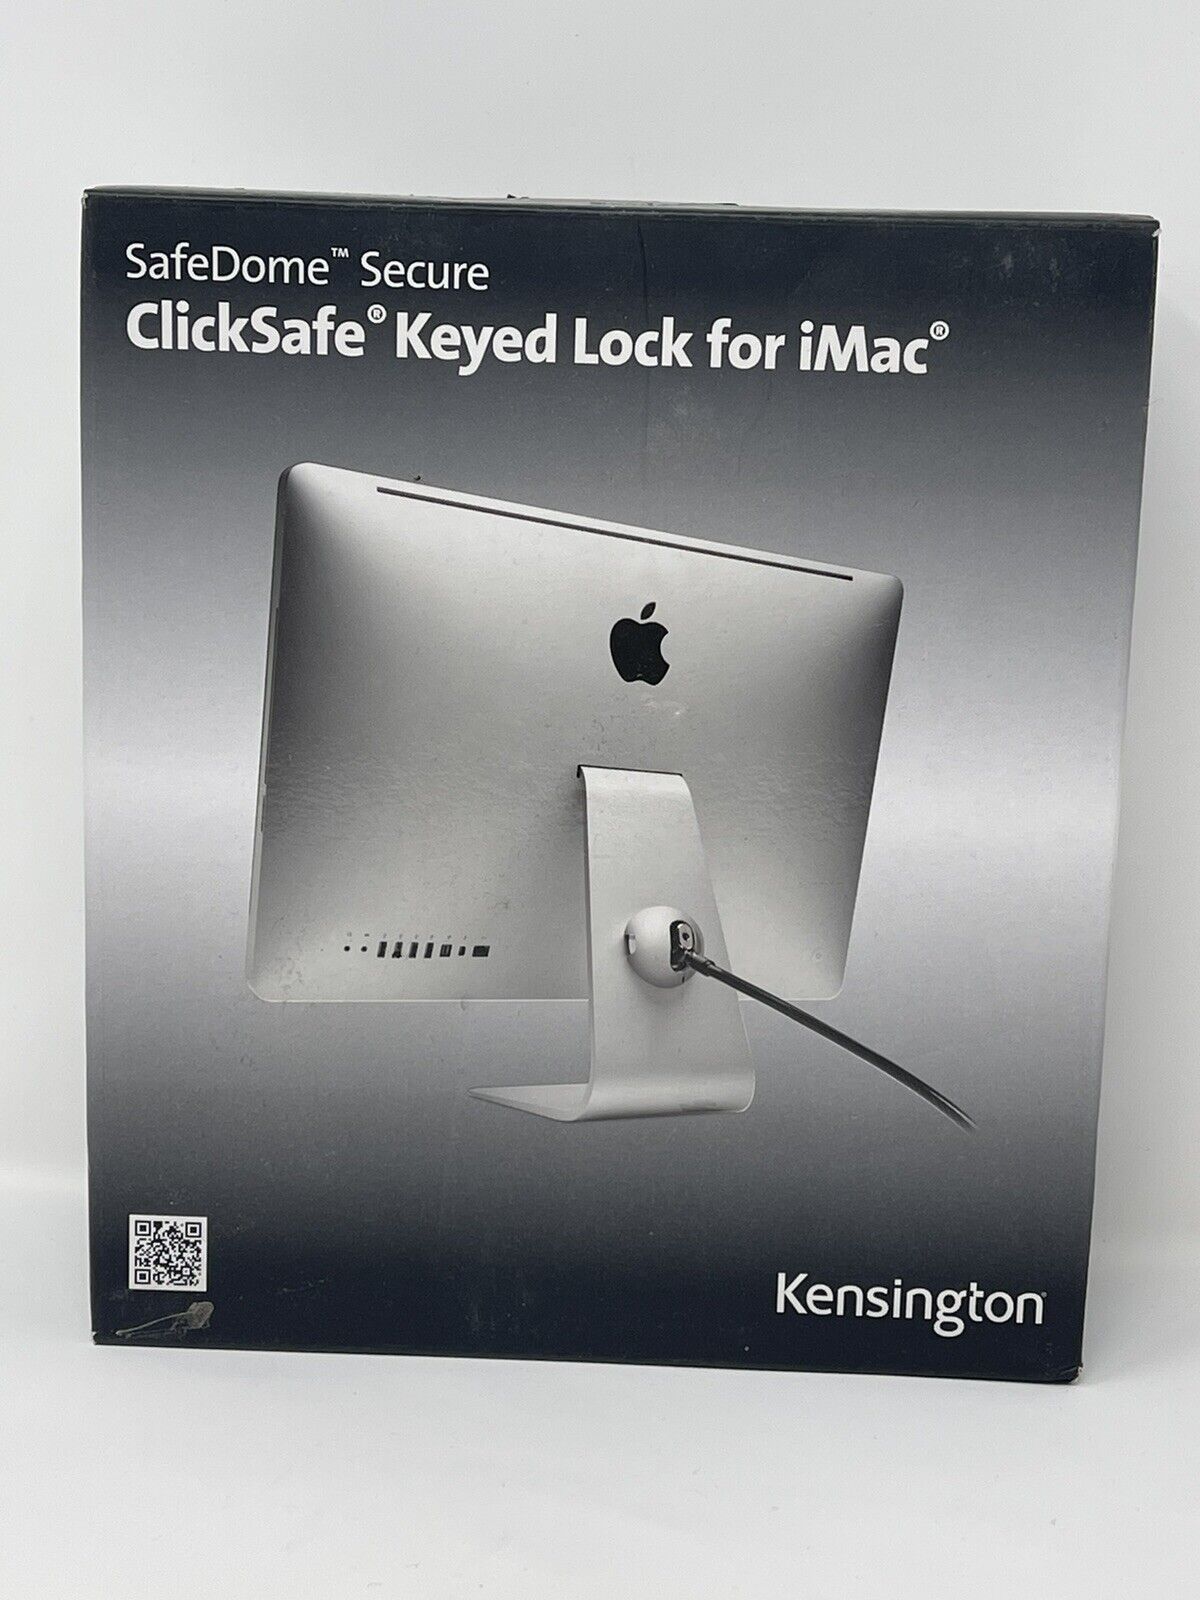 NEW** Kensington Technology Group K64962Usa Safedome Clicksafe Keyed Lock